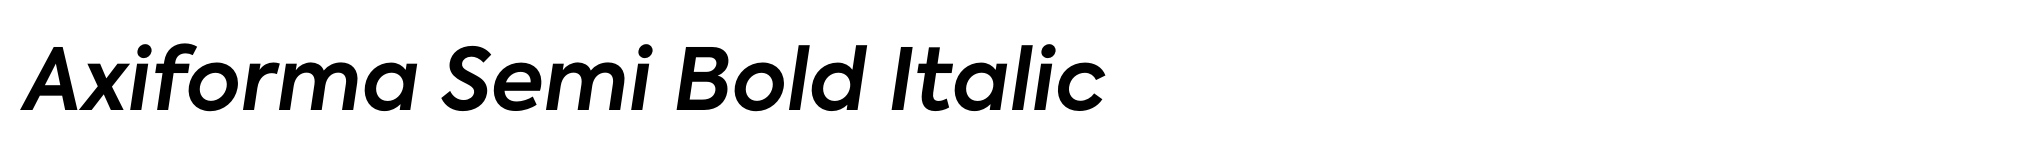 Axiforma Semi Bold Italic image